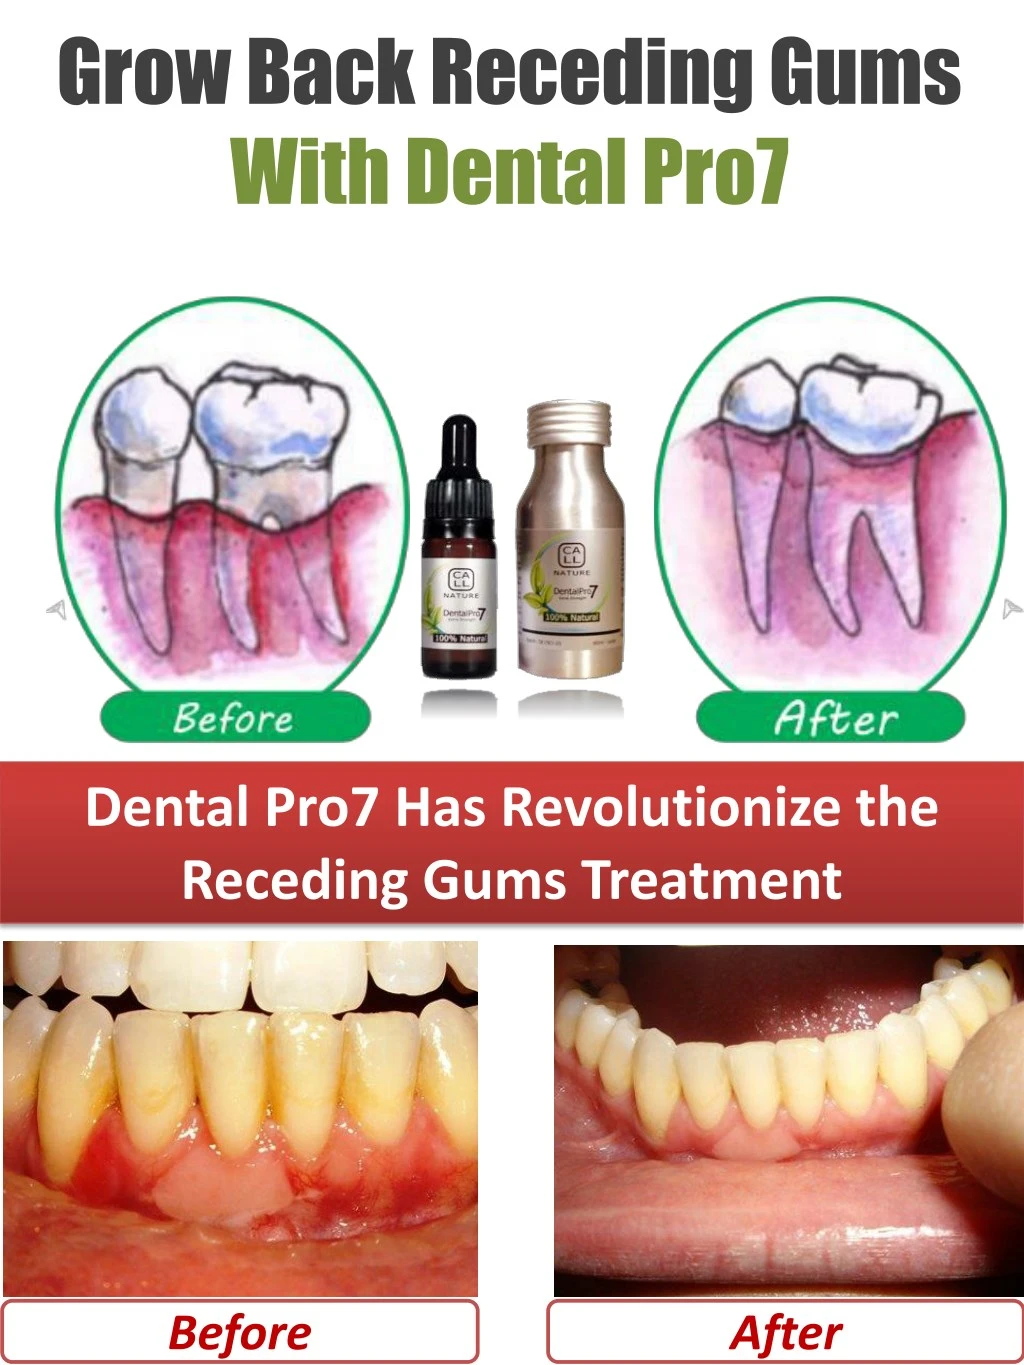 grow back receding gums with dental pro7